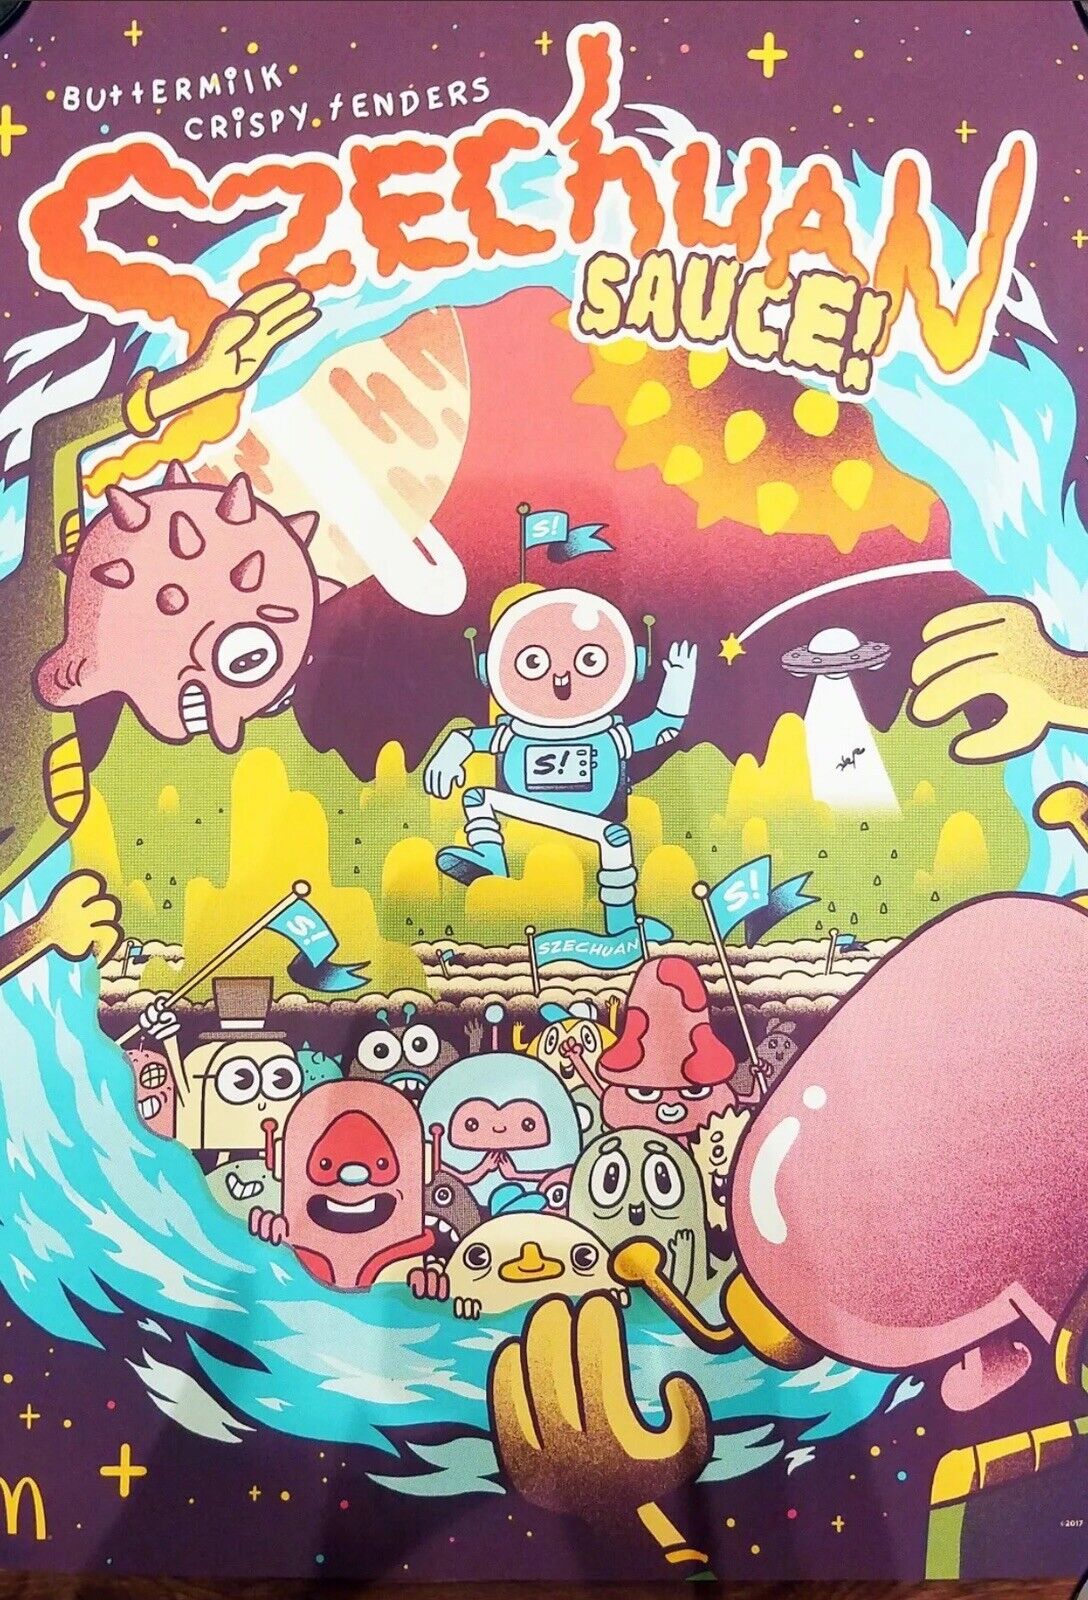 mcdonalds szechuan sauce poster 365/1000